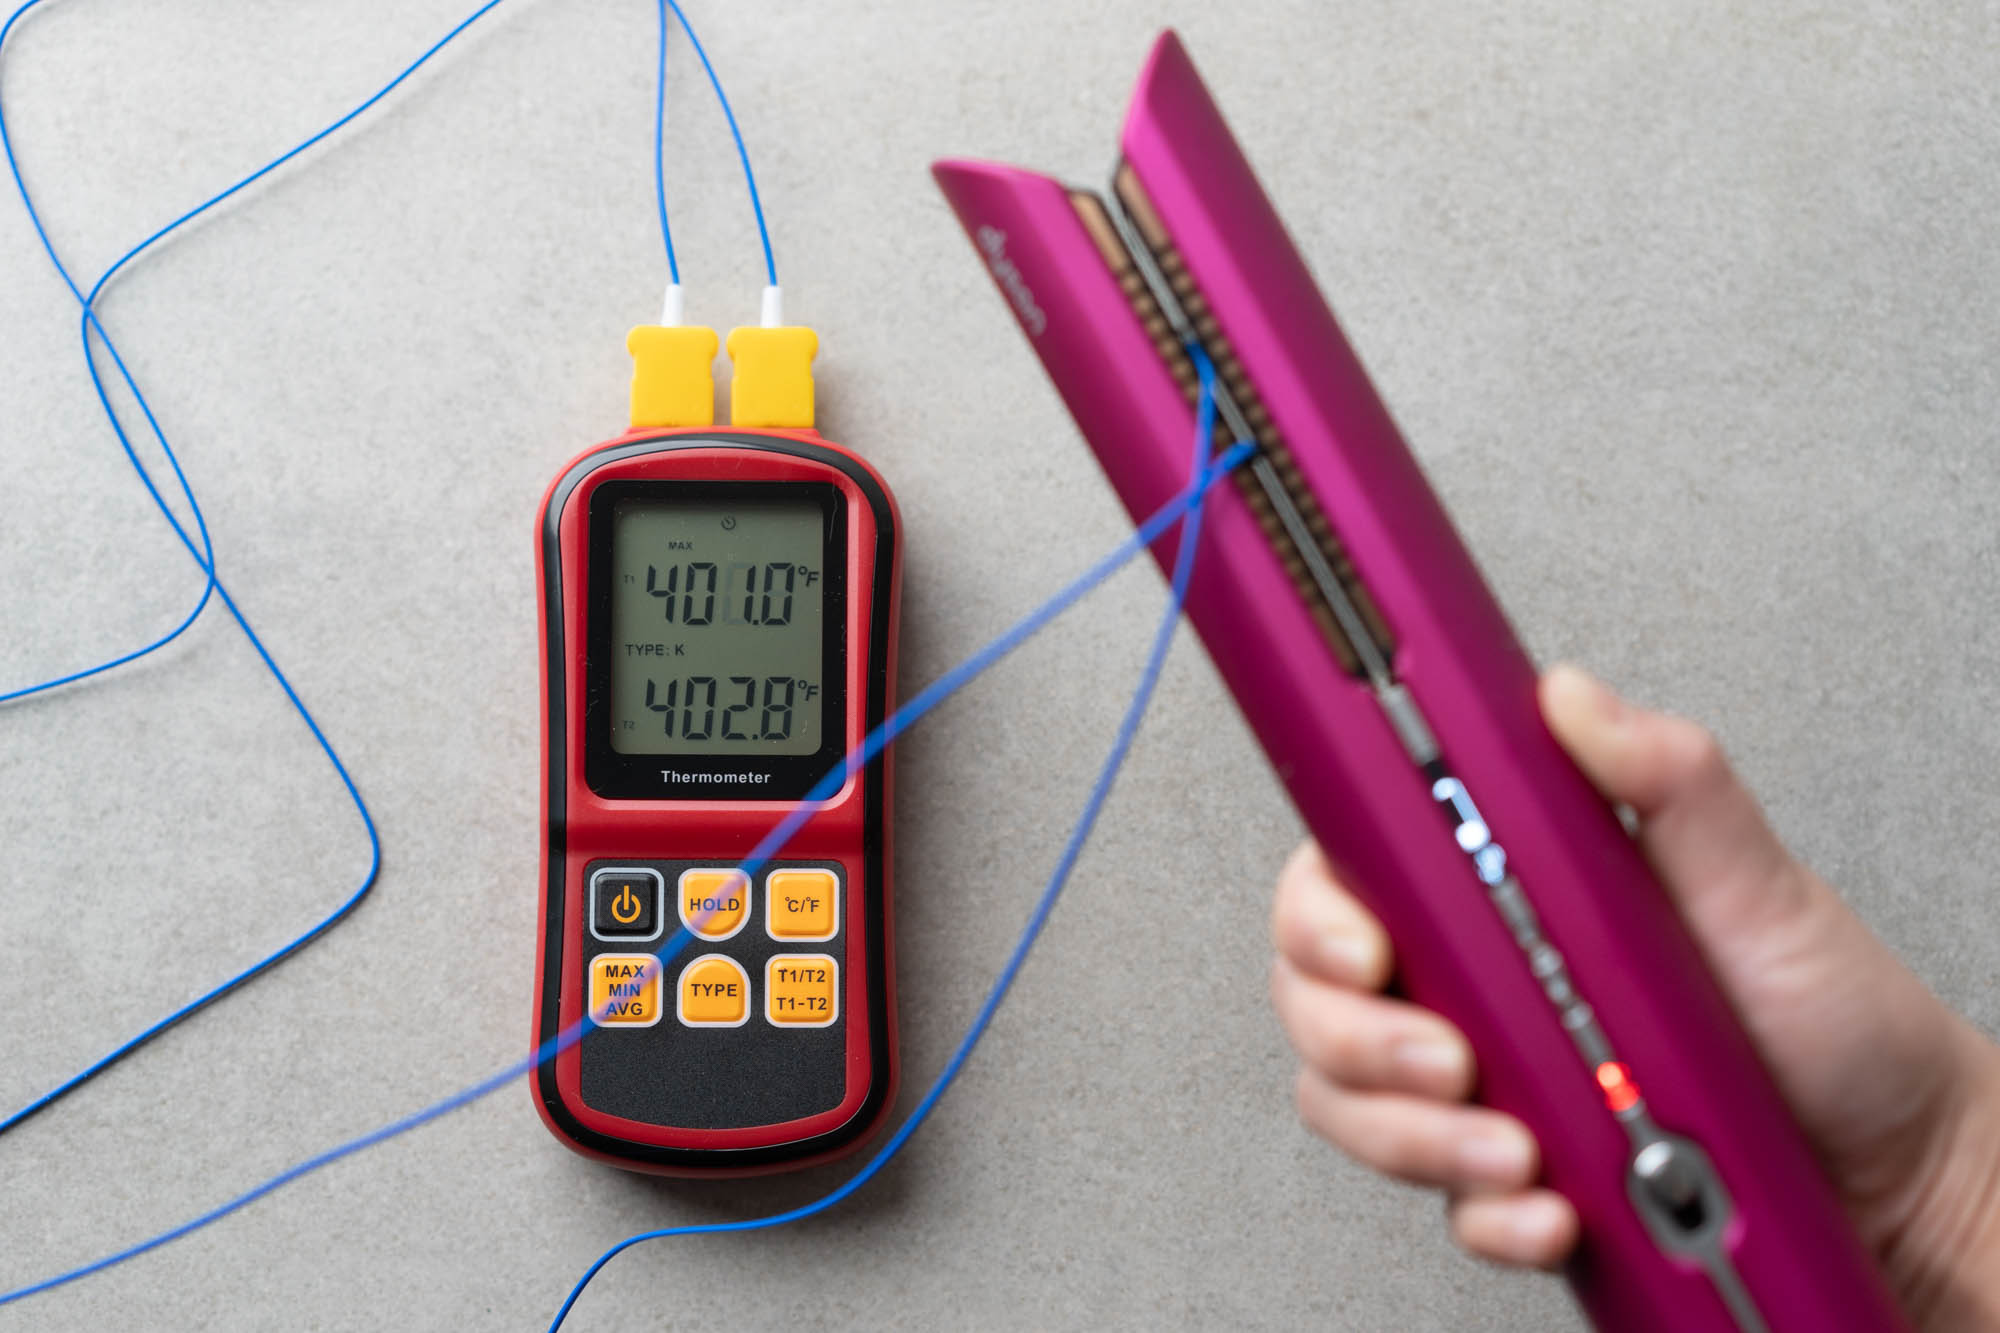 measuring hair straightener temperature with probe